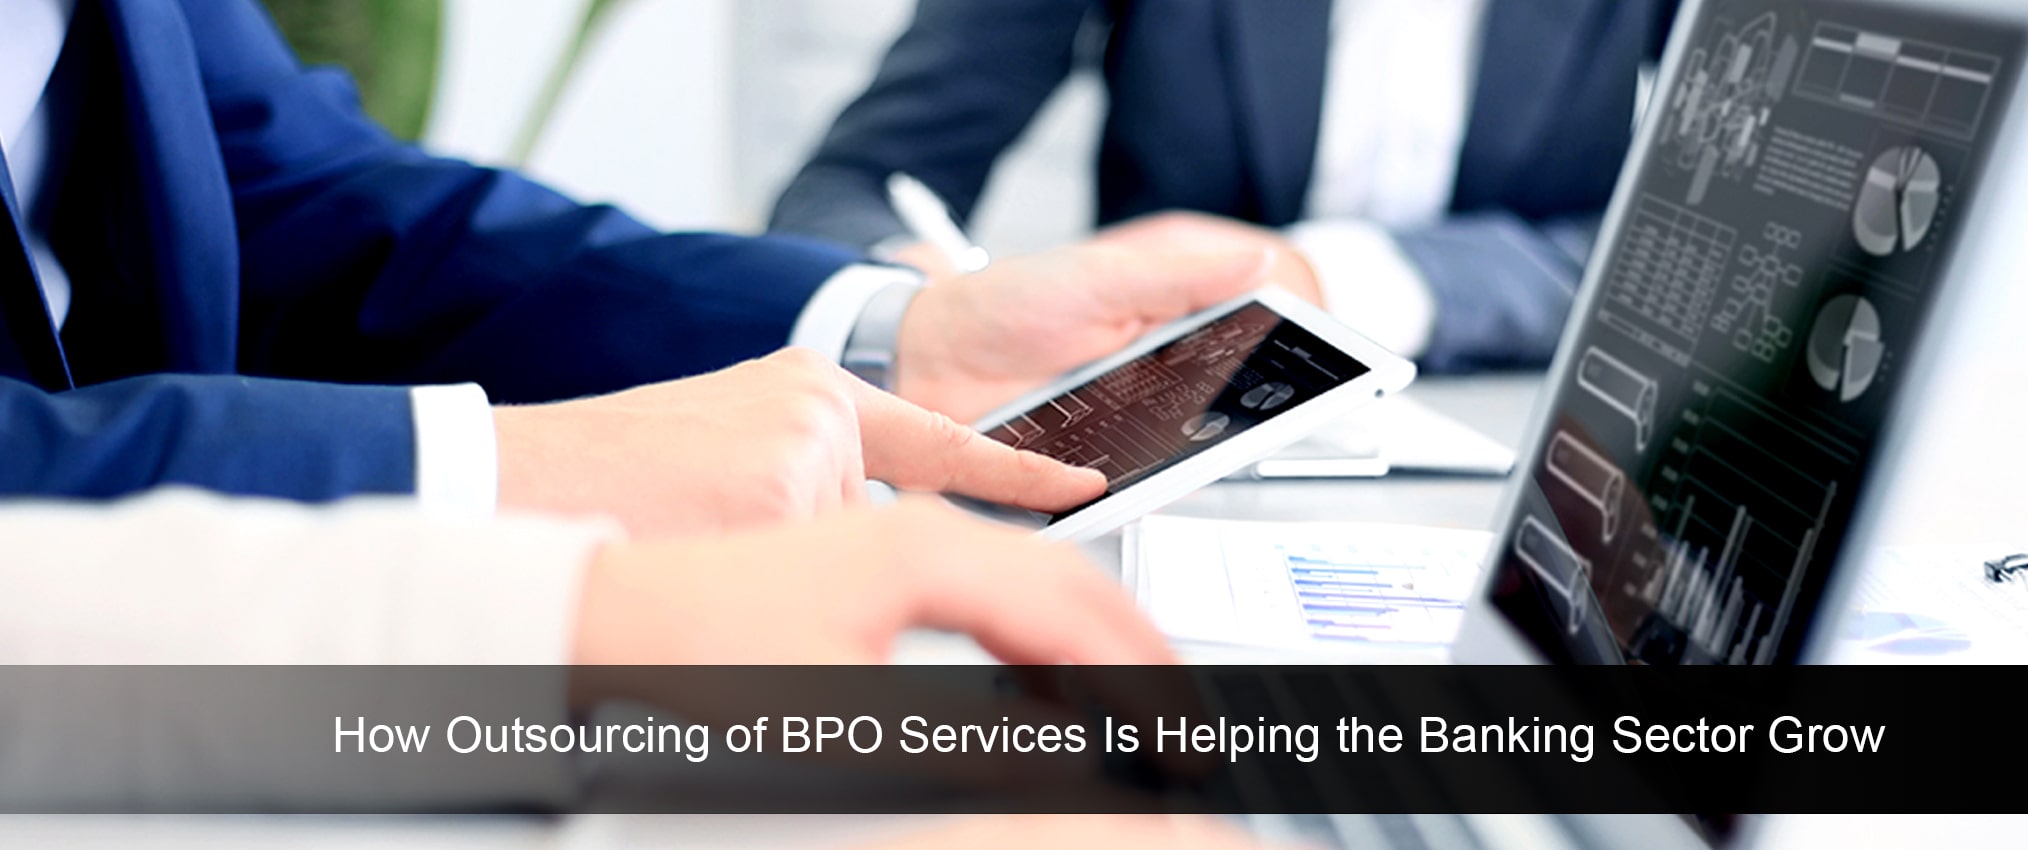 BPO services